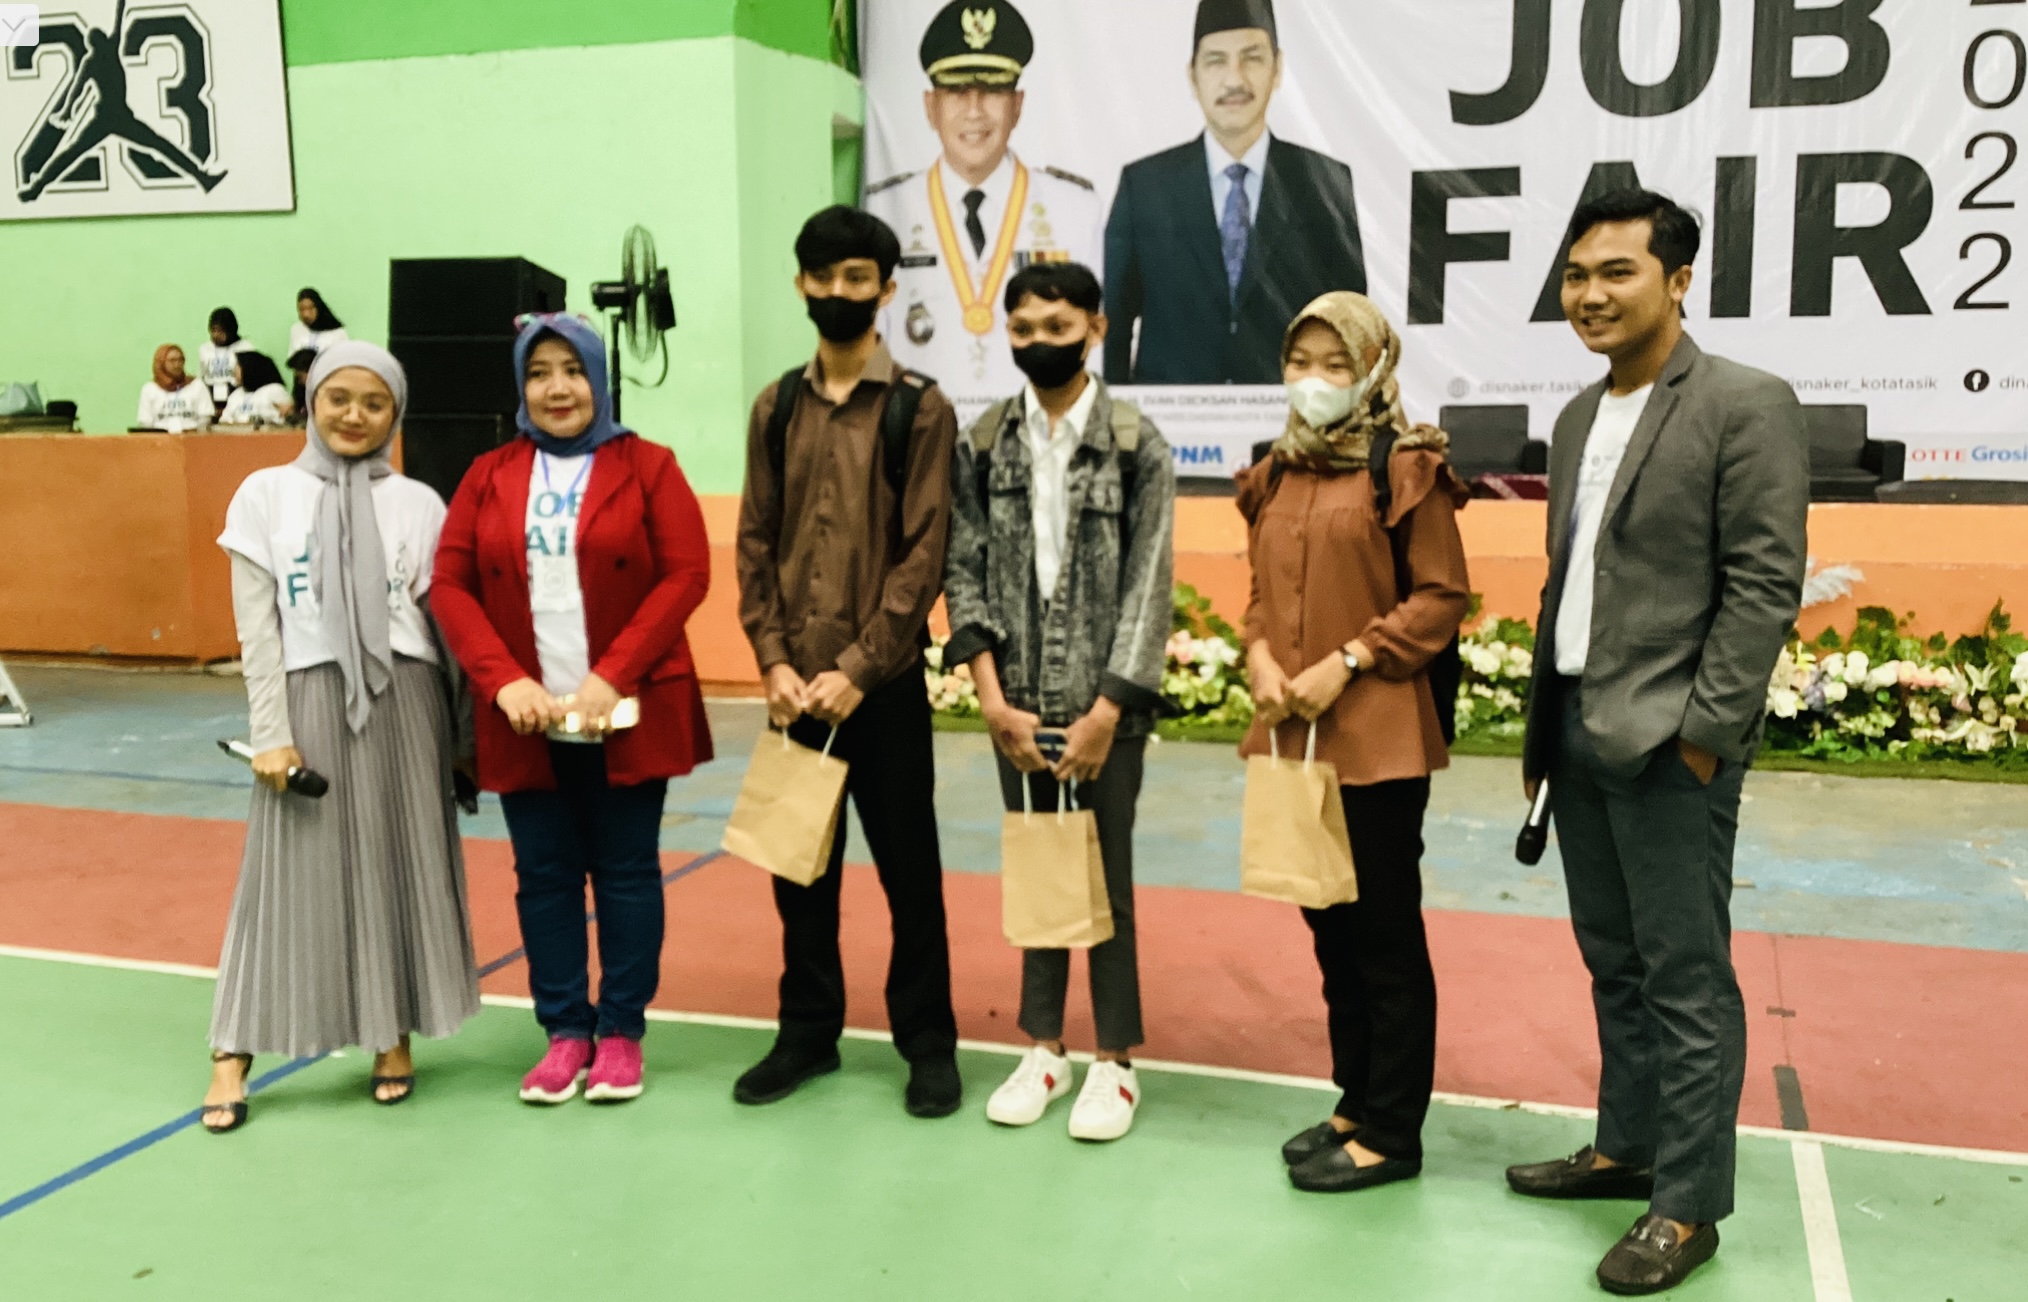 Job Fair 2022 Kota Tasikmalaya, Pencaker : Terima Kasih Dinas Tenaga Kerja Sudah Memfasilitasi Kami